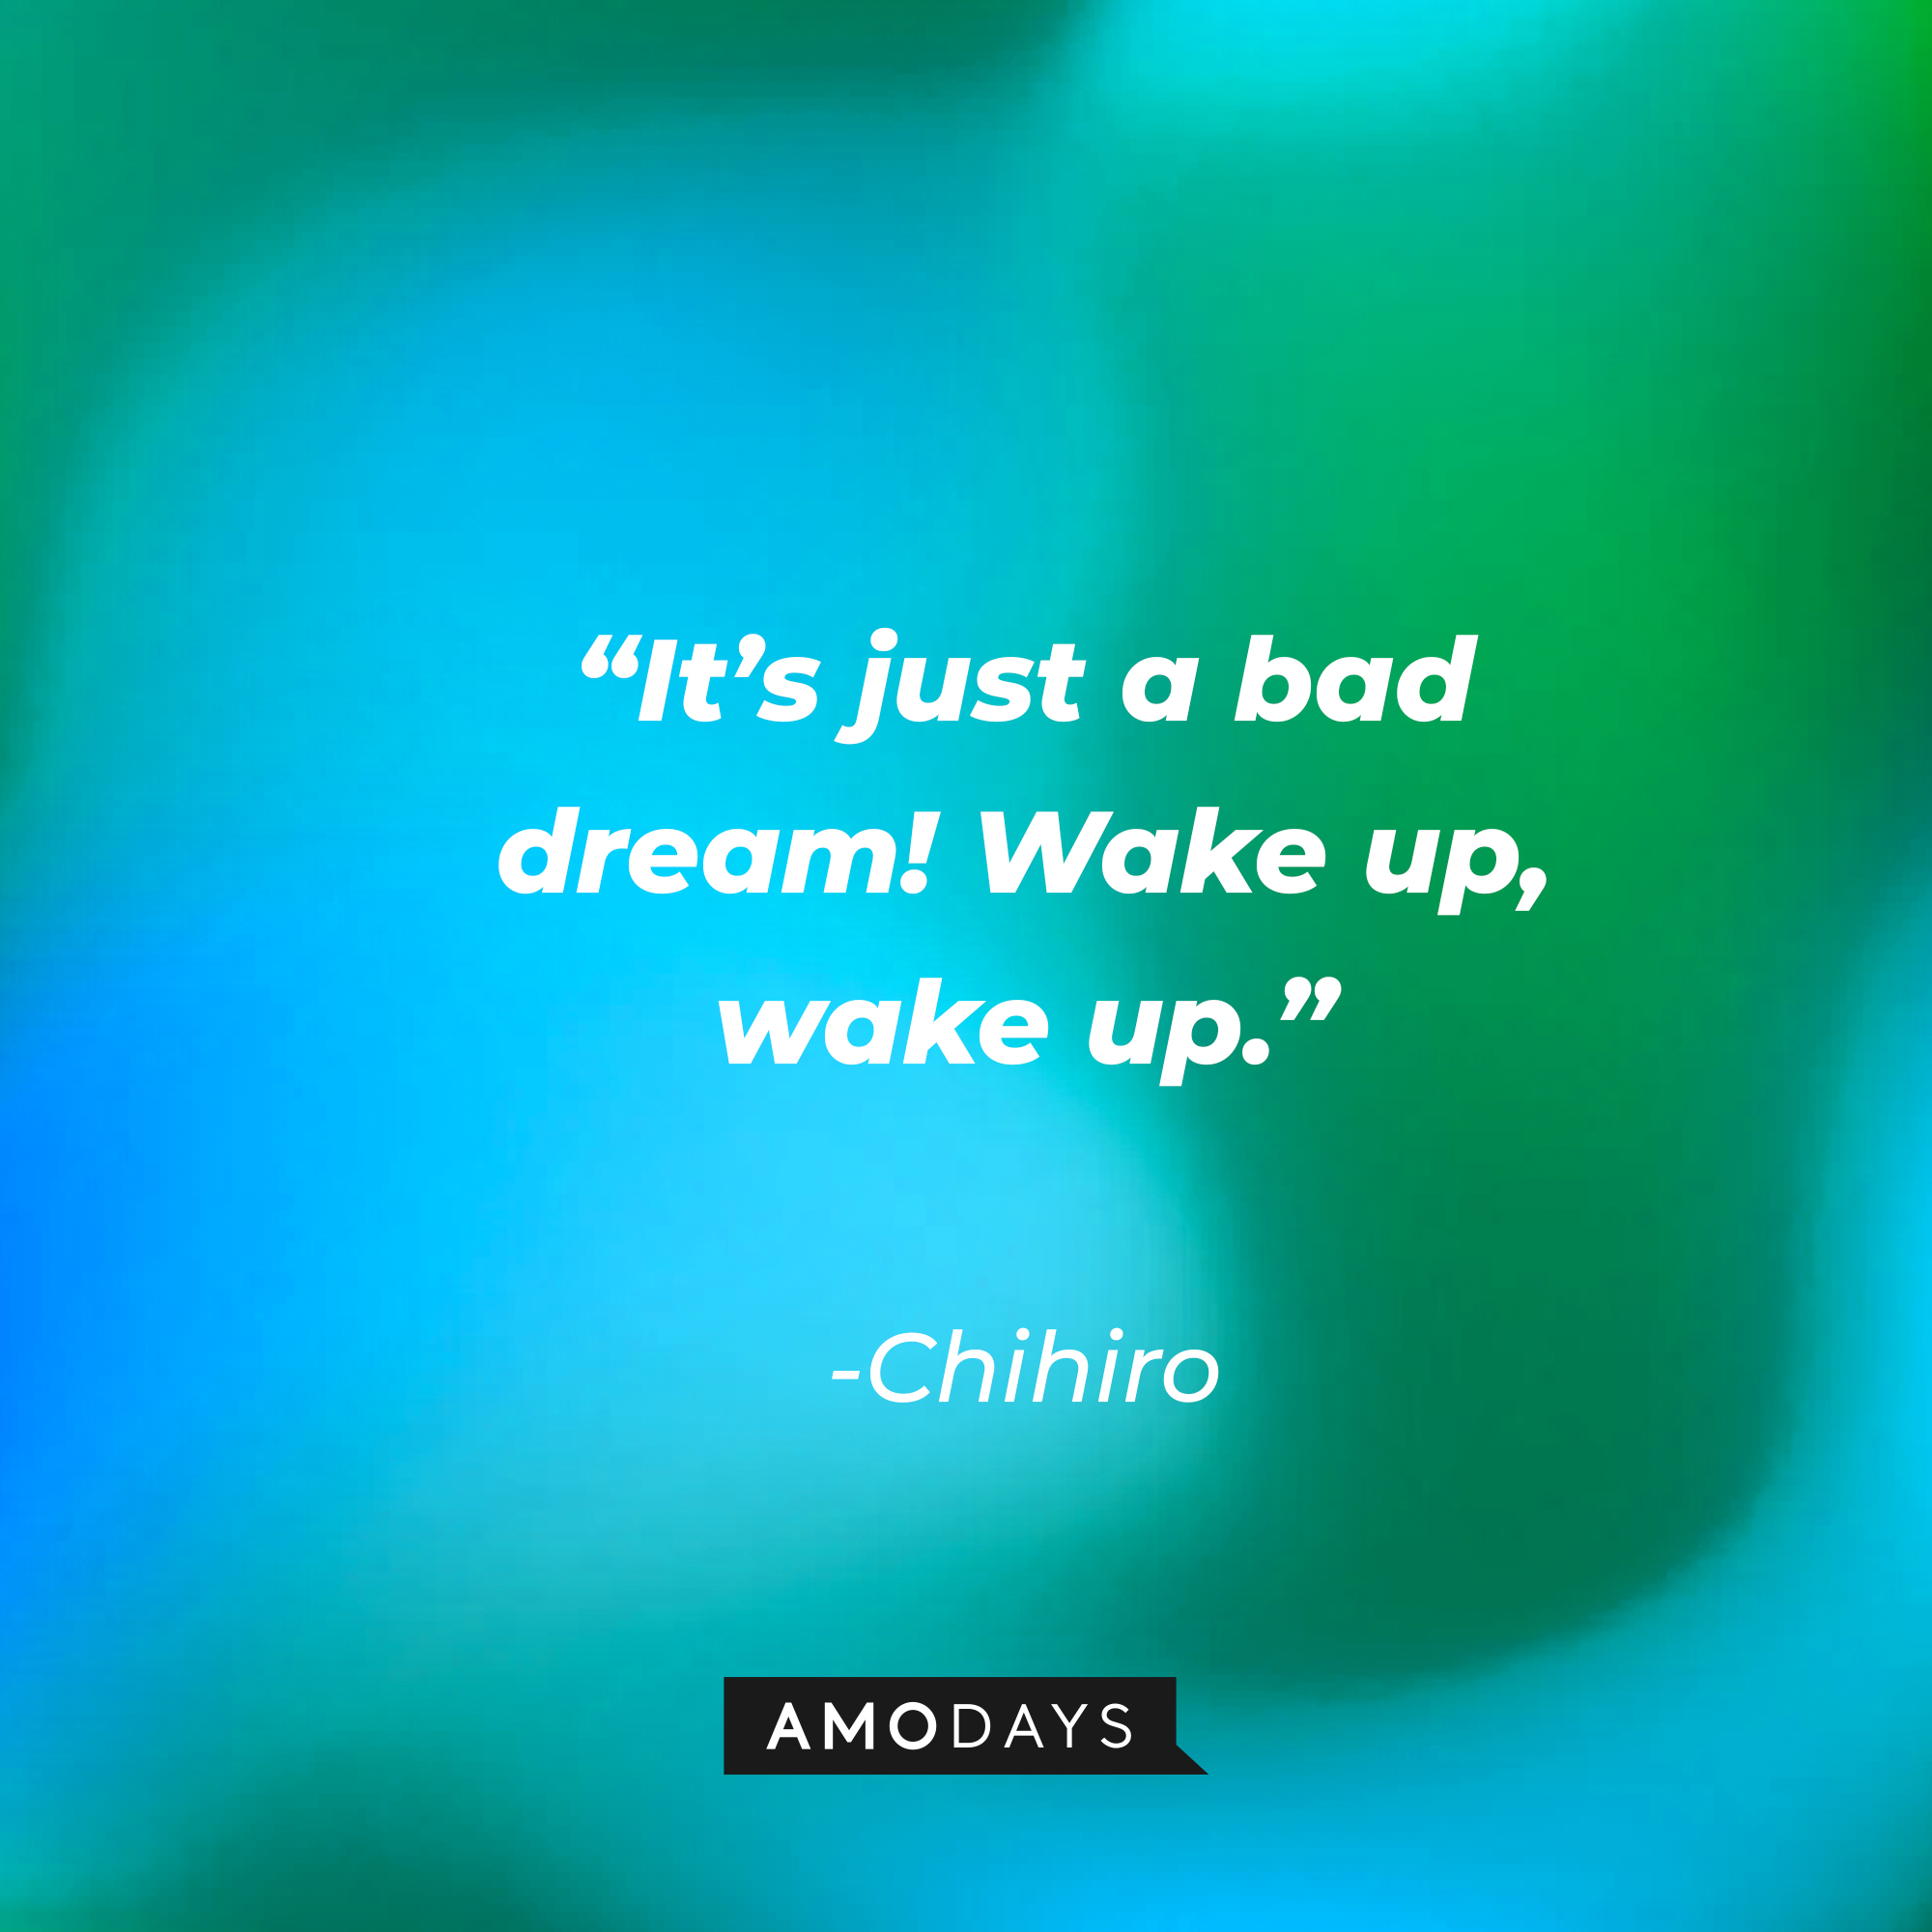 Chihiro’s quote: “It’s just a bad dream! Wake up, wake up.” | Source: AmoDays